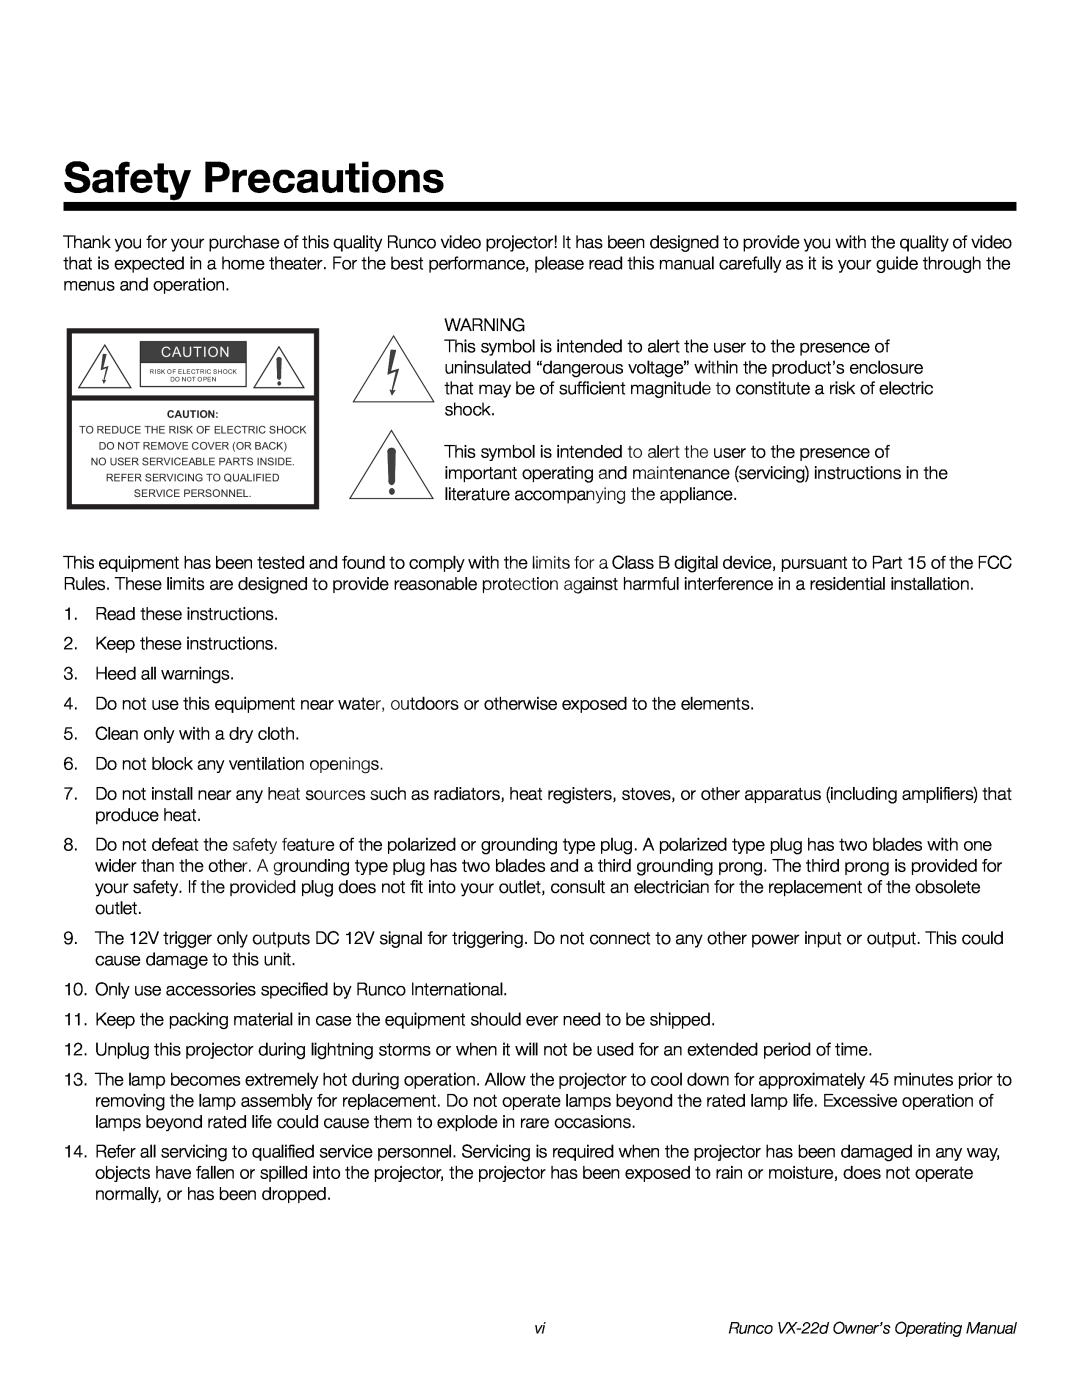 Runco VX-22D manual Safety Precautions 